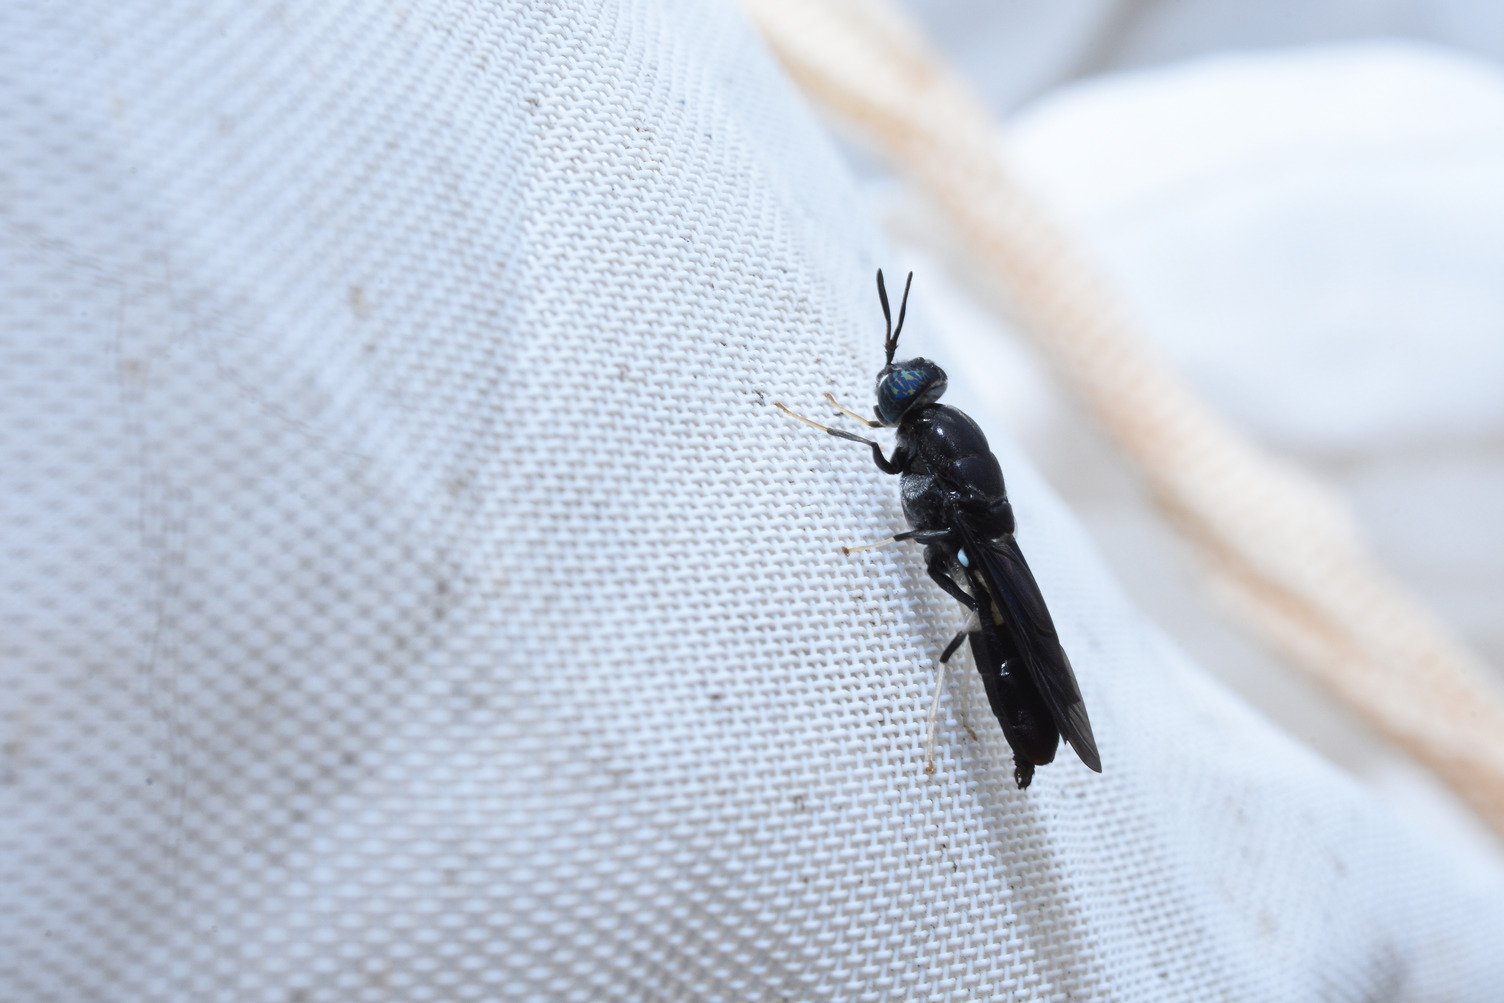 Adult black solider fly